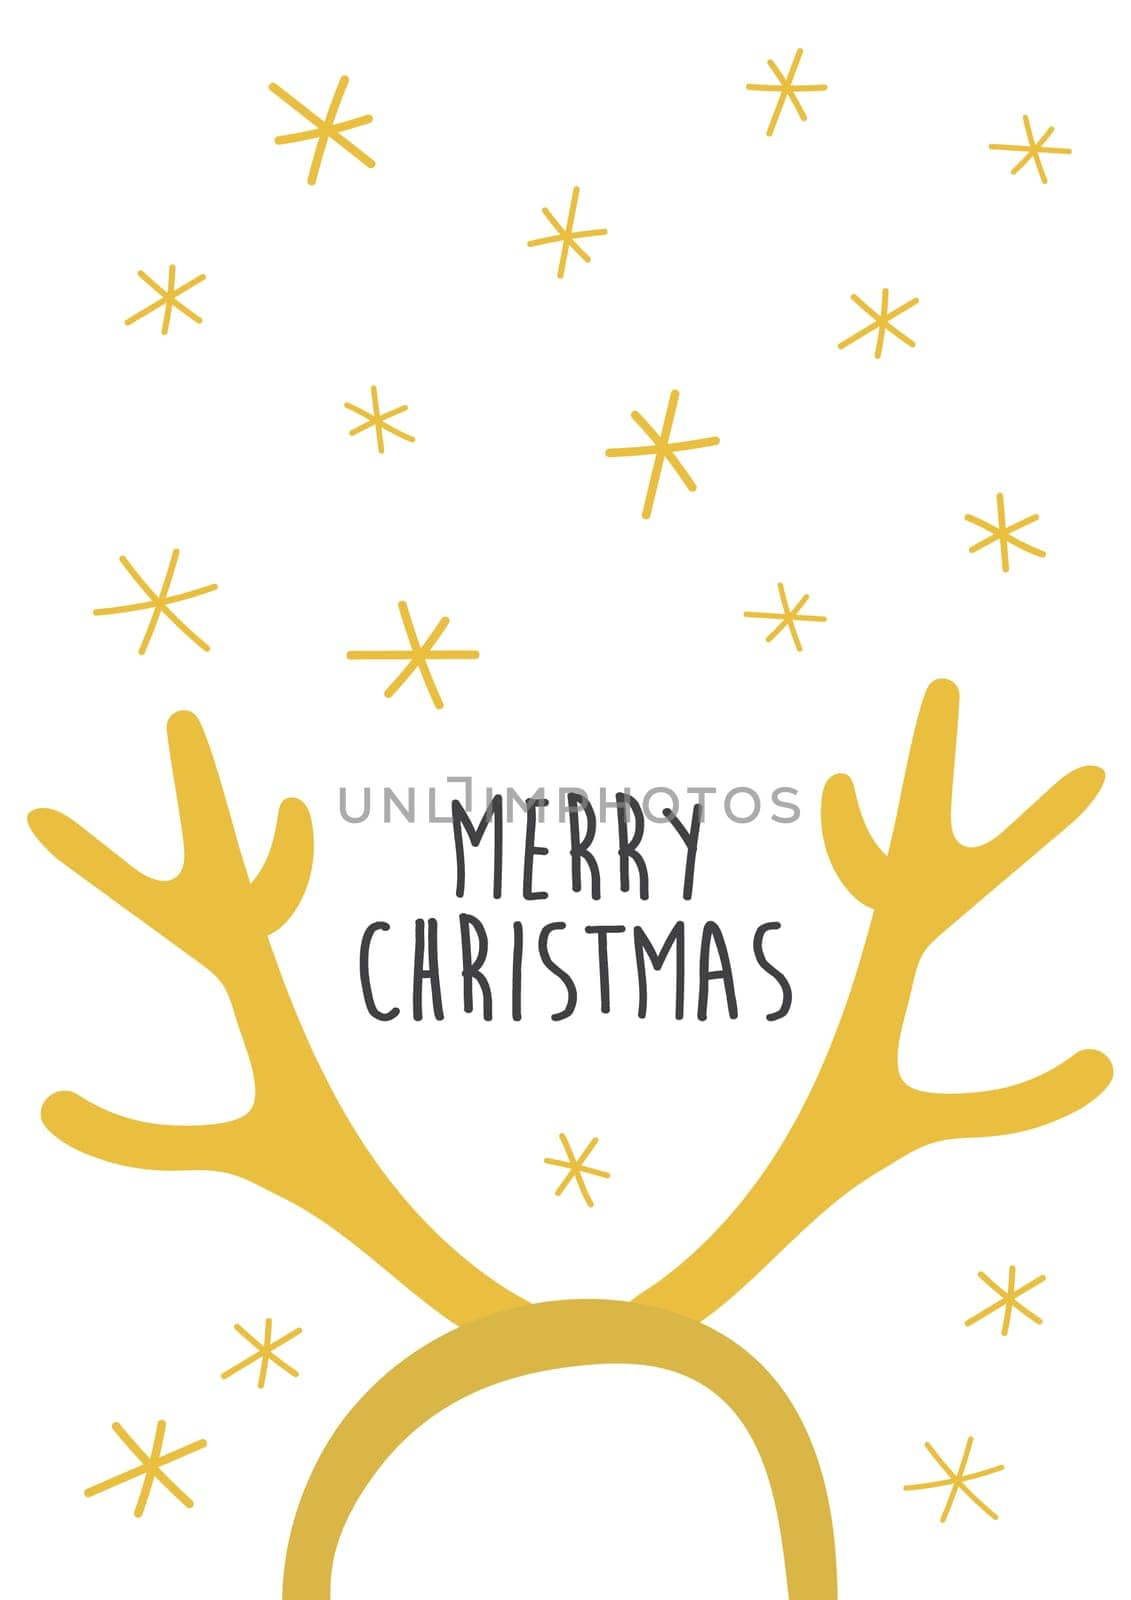 Merry Christmas greeting card. Reindeer antlers horns. Cartoon illustration by natali_brill